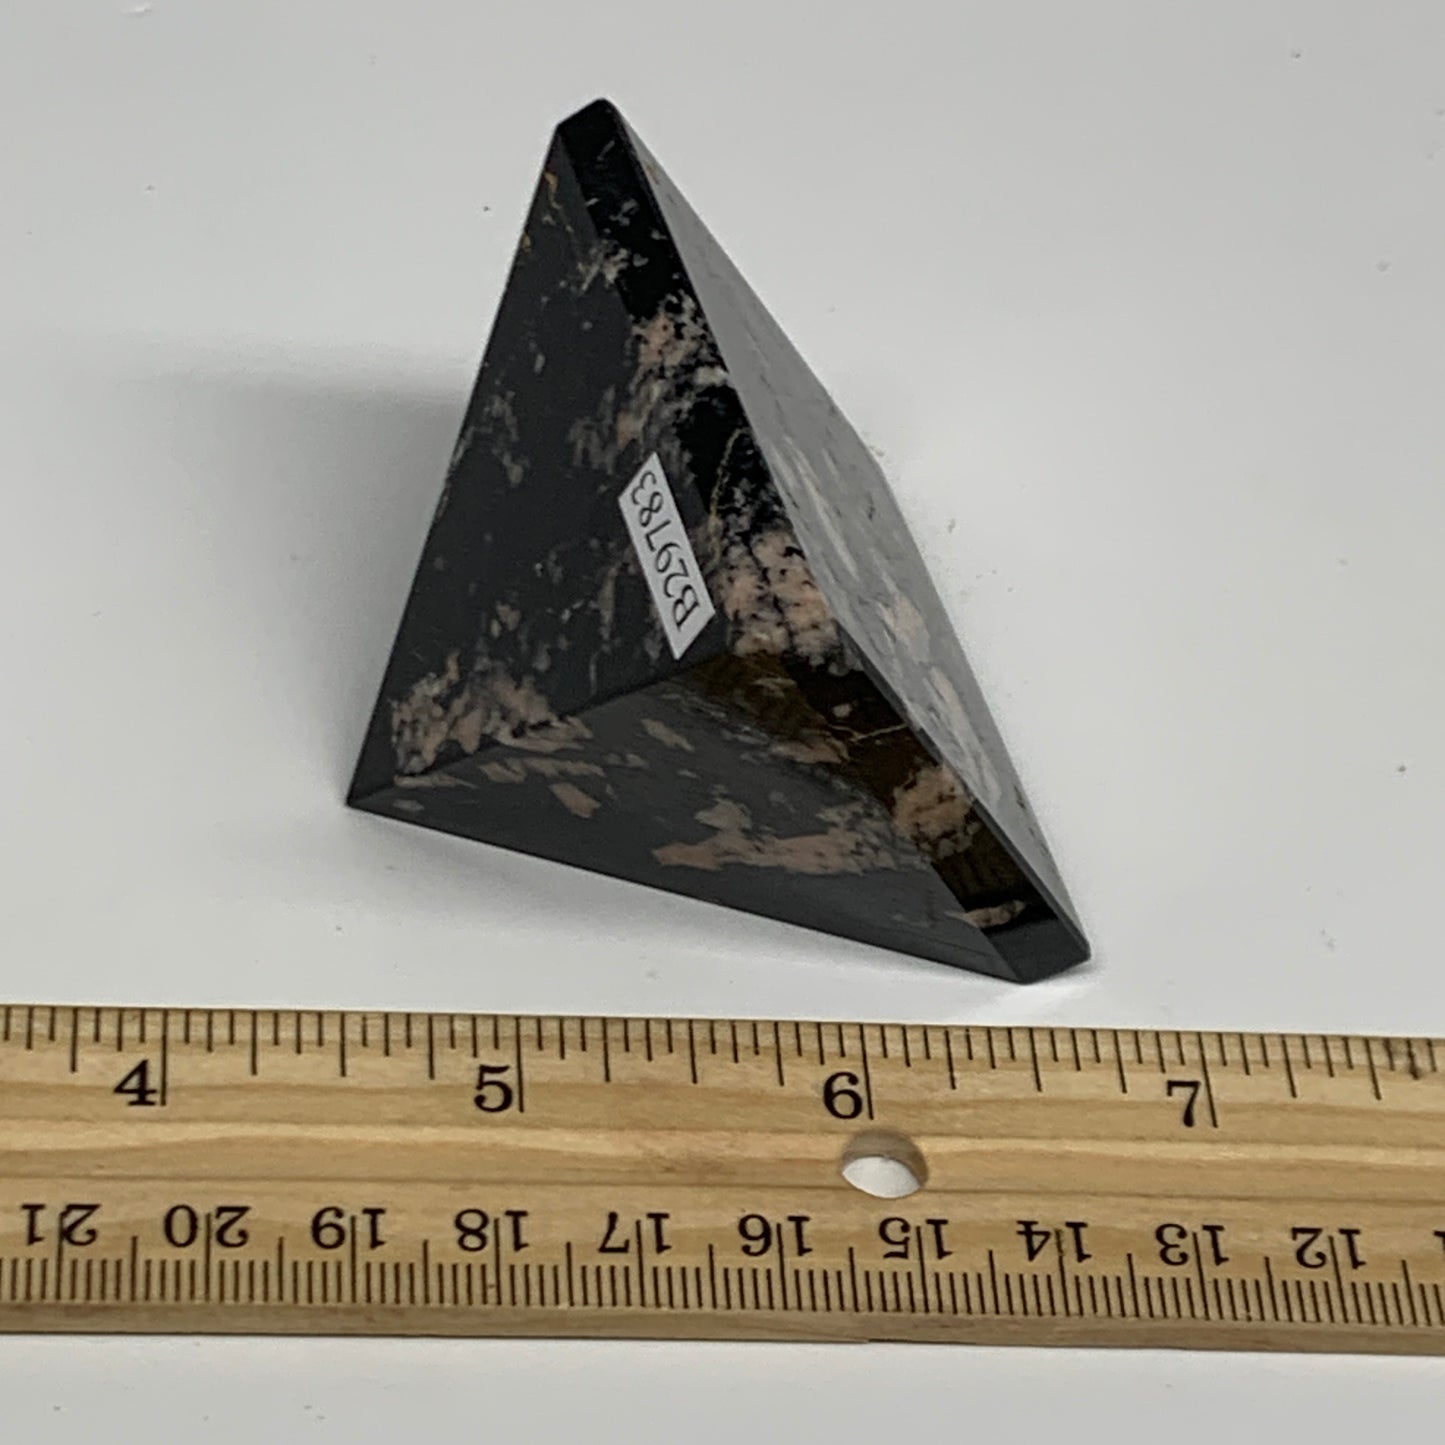 150g, 1.8"x2.1", Black Tourmaline Pyramid Gemstone,Healing Crystal, B29783